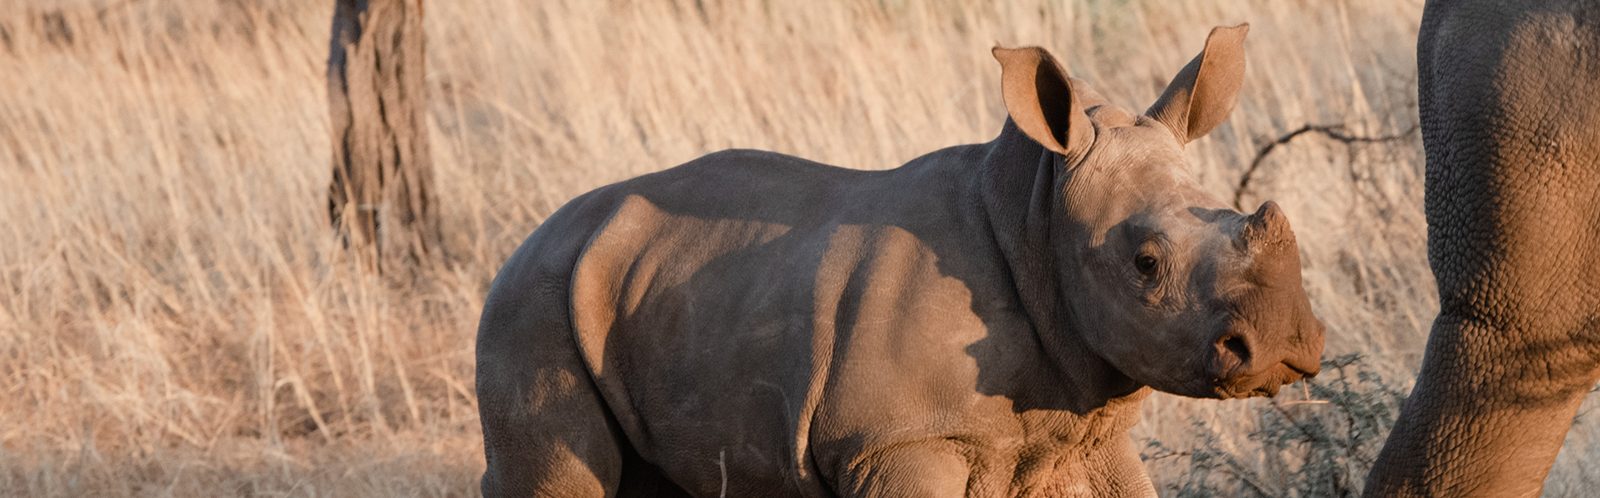 New baby calf at the rhino sanctuary Namibia.